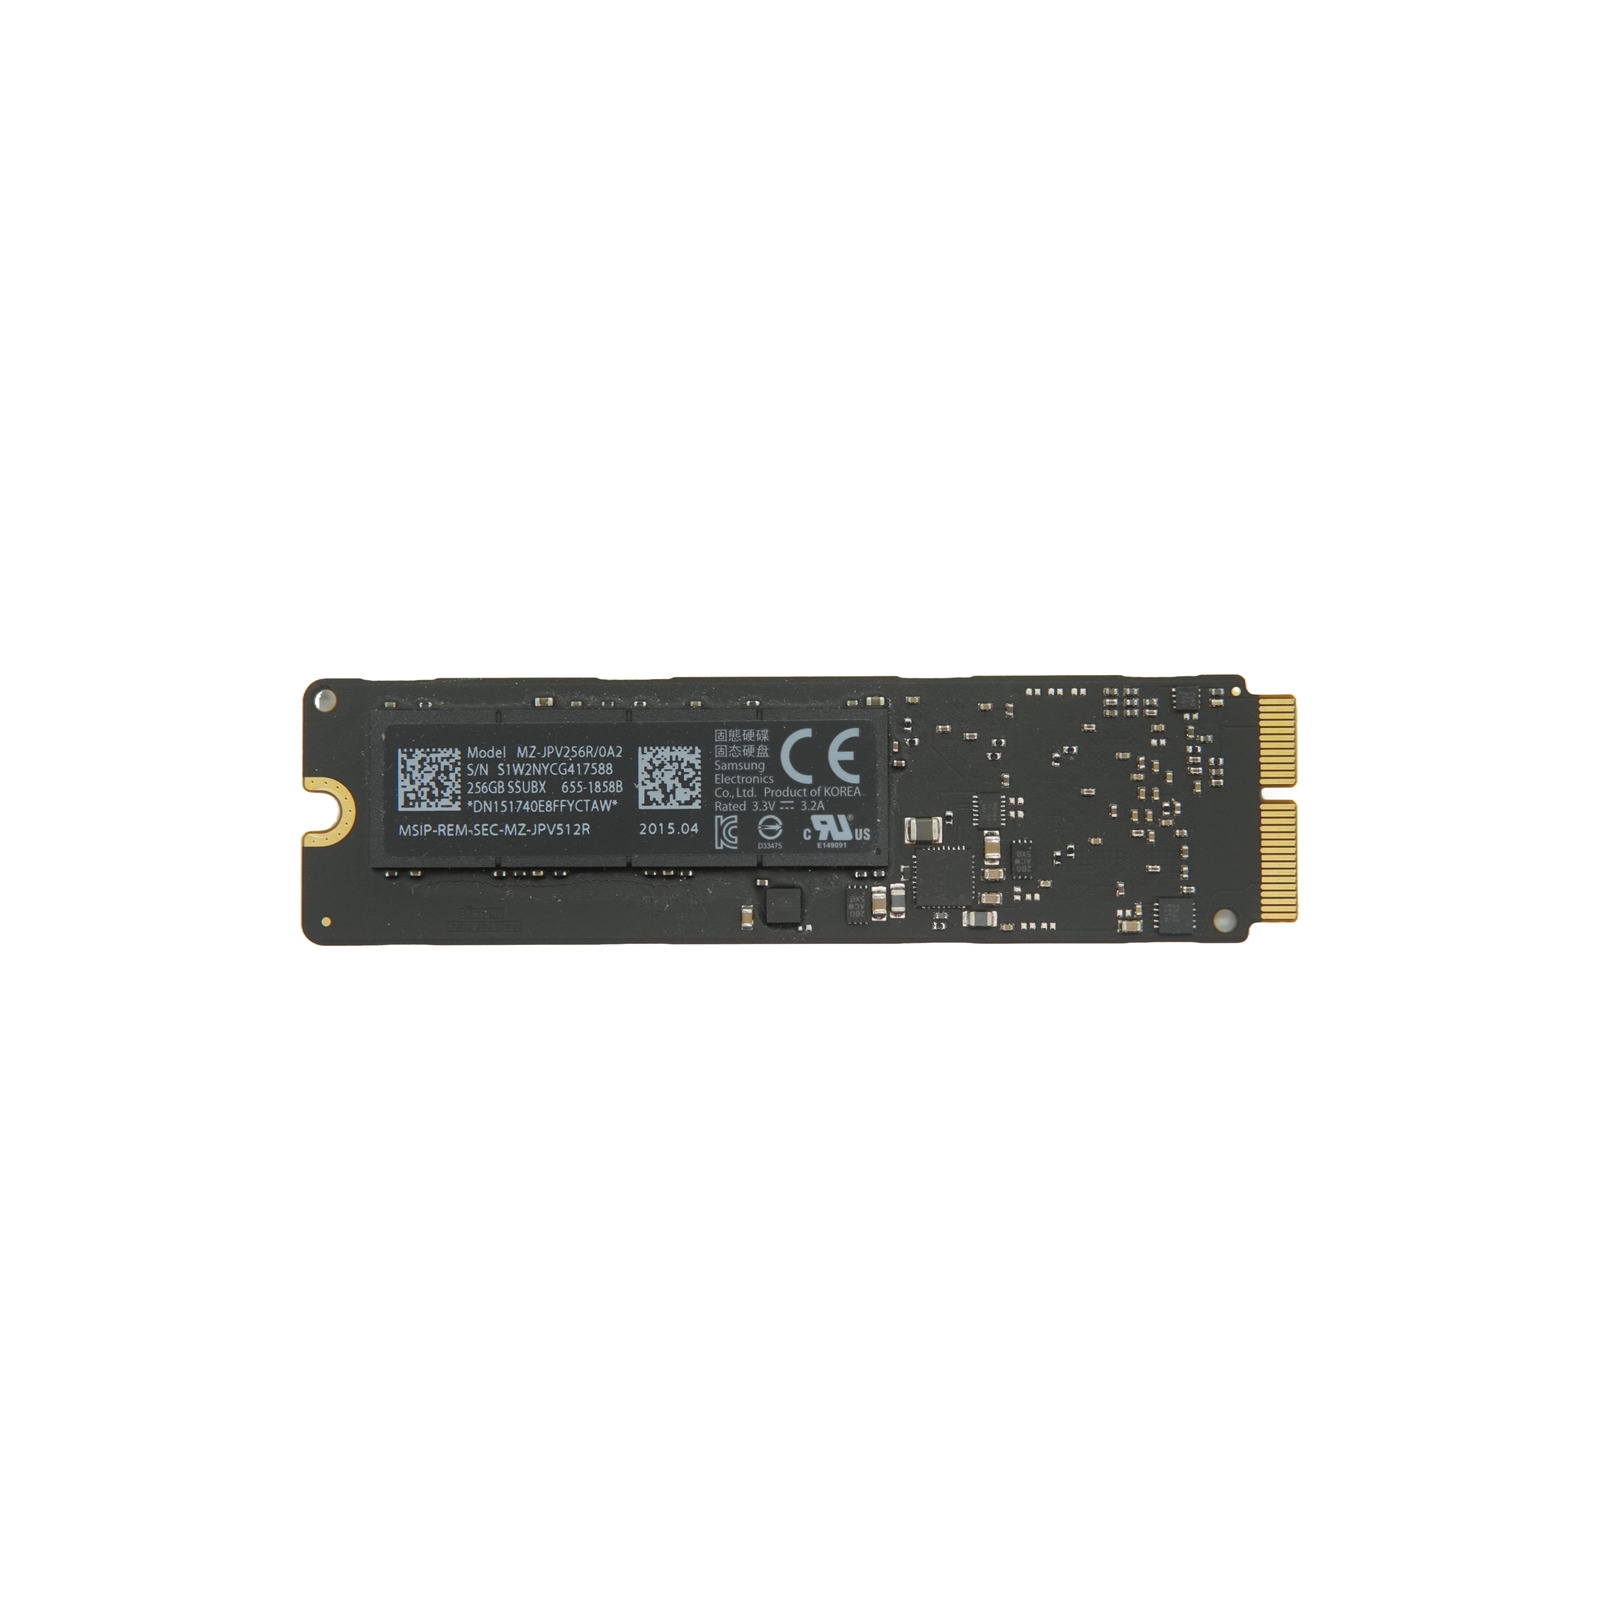 Samsung MZ-JPV256R/0A2 256GB PCI Express 3.0 x4 M.2 2280 SSD For Macbook